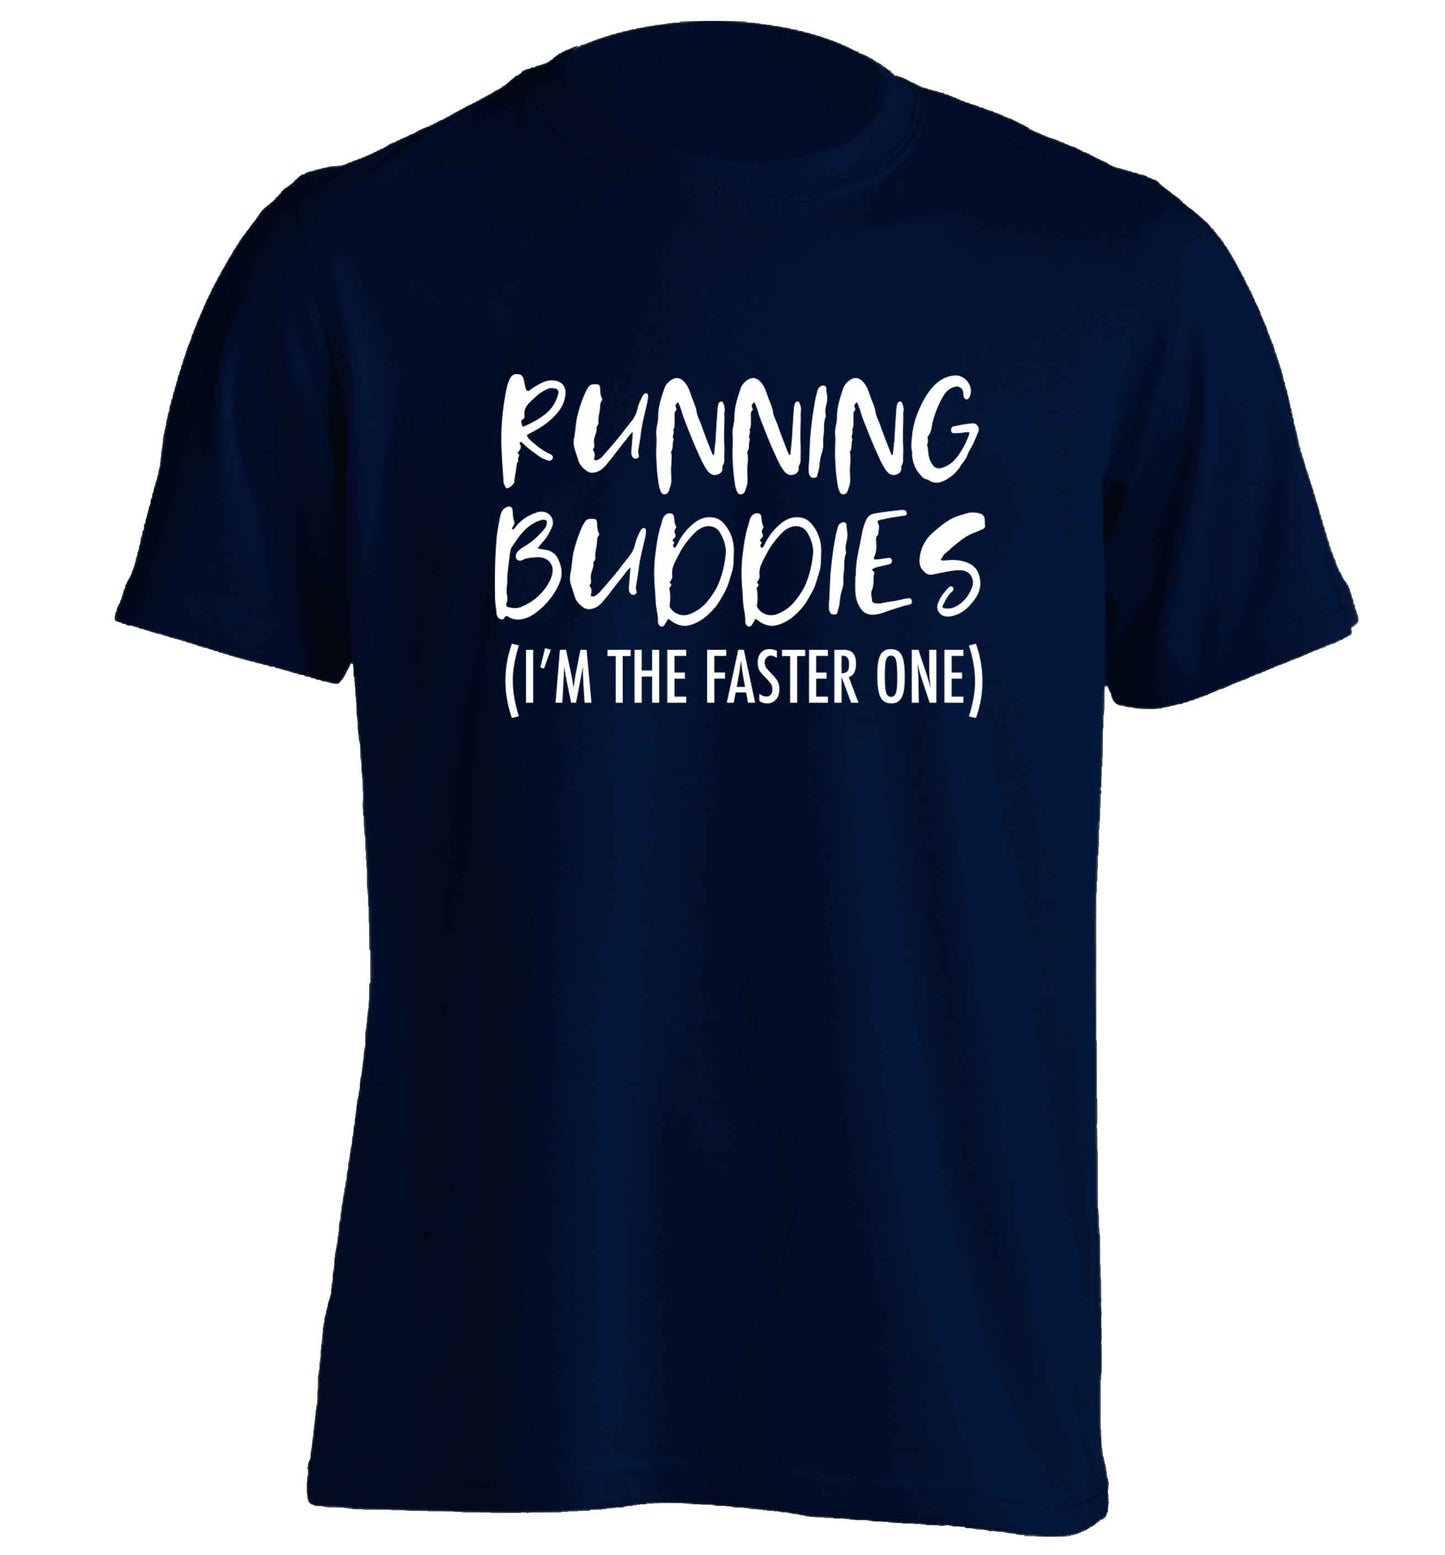 Running buddies (I'm the faster one) adults unisex navy Tshirt 2XL